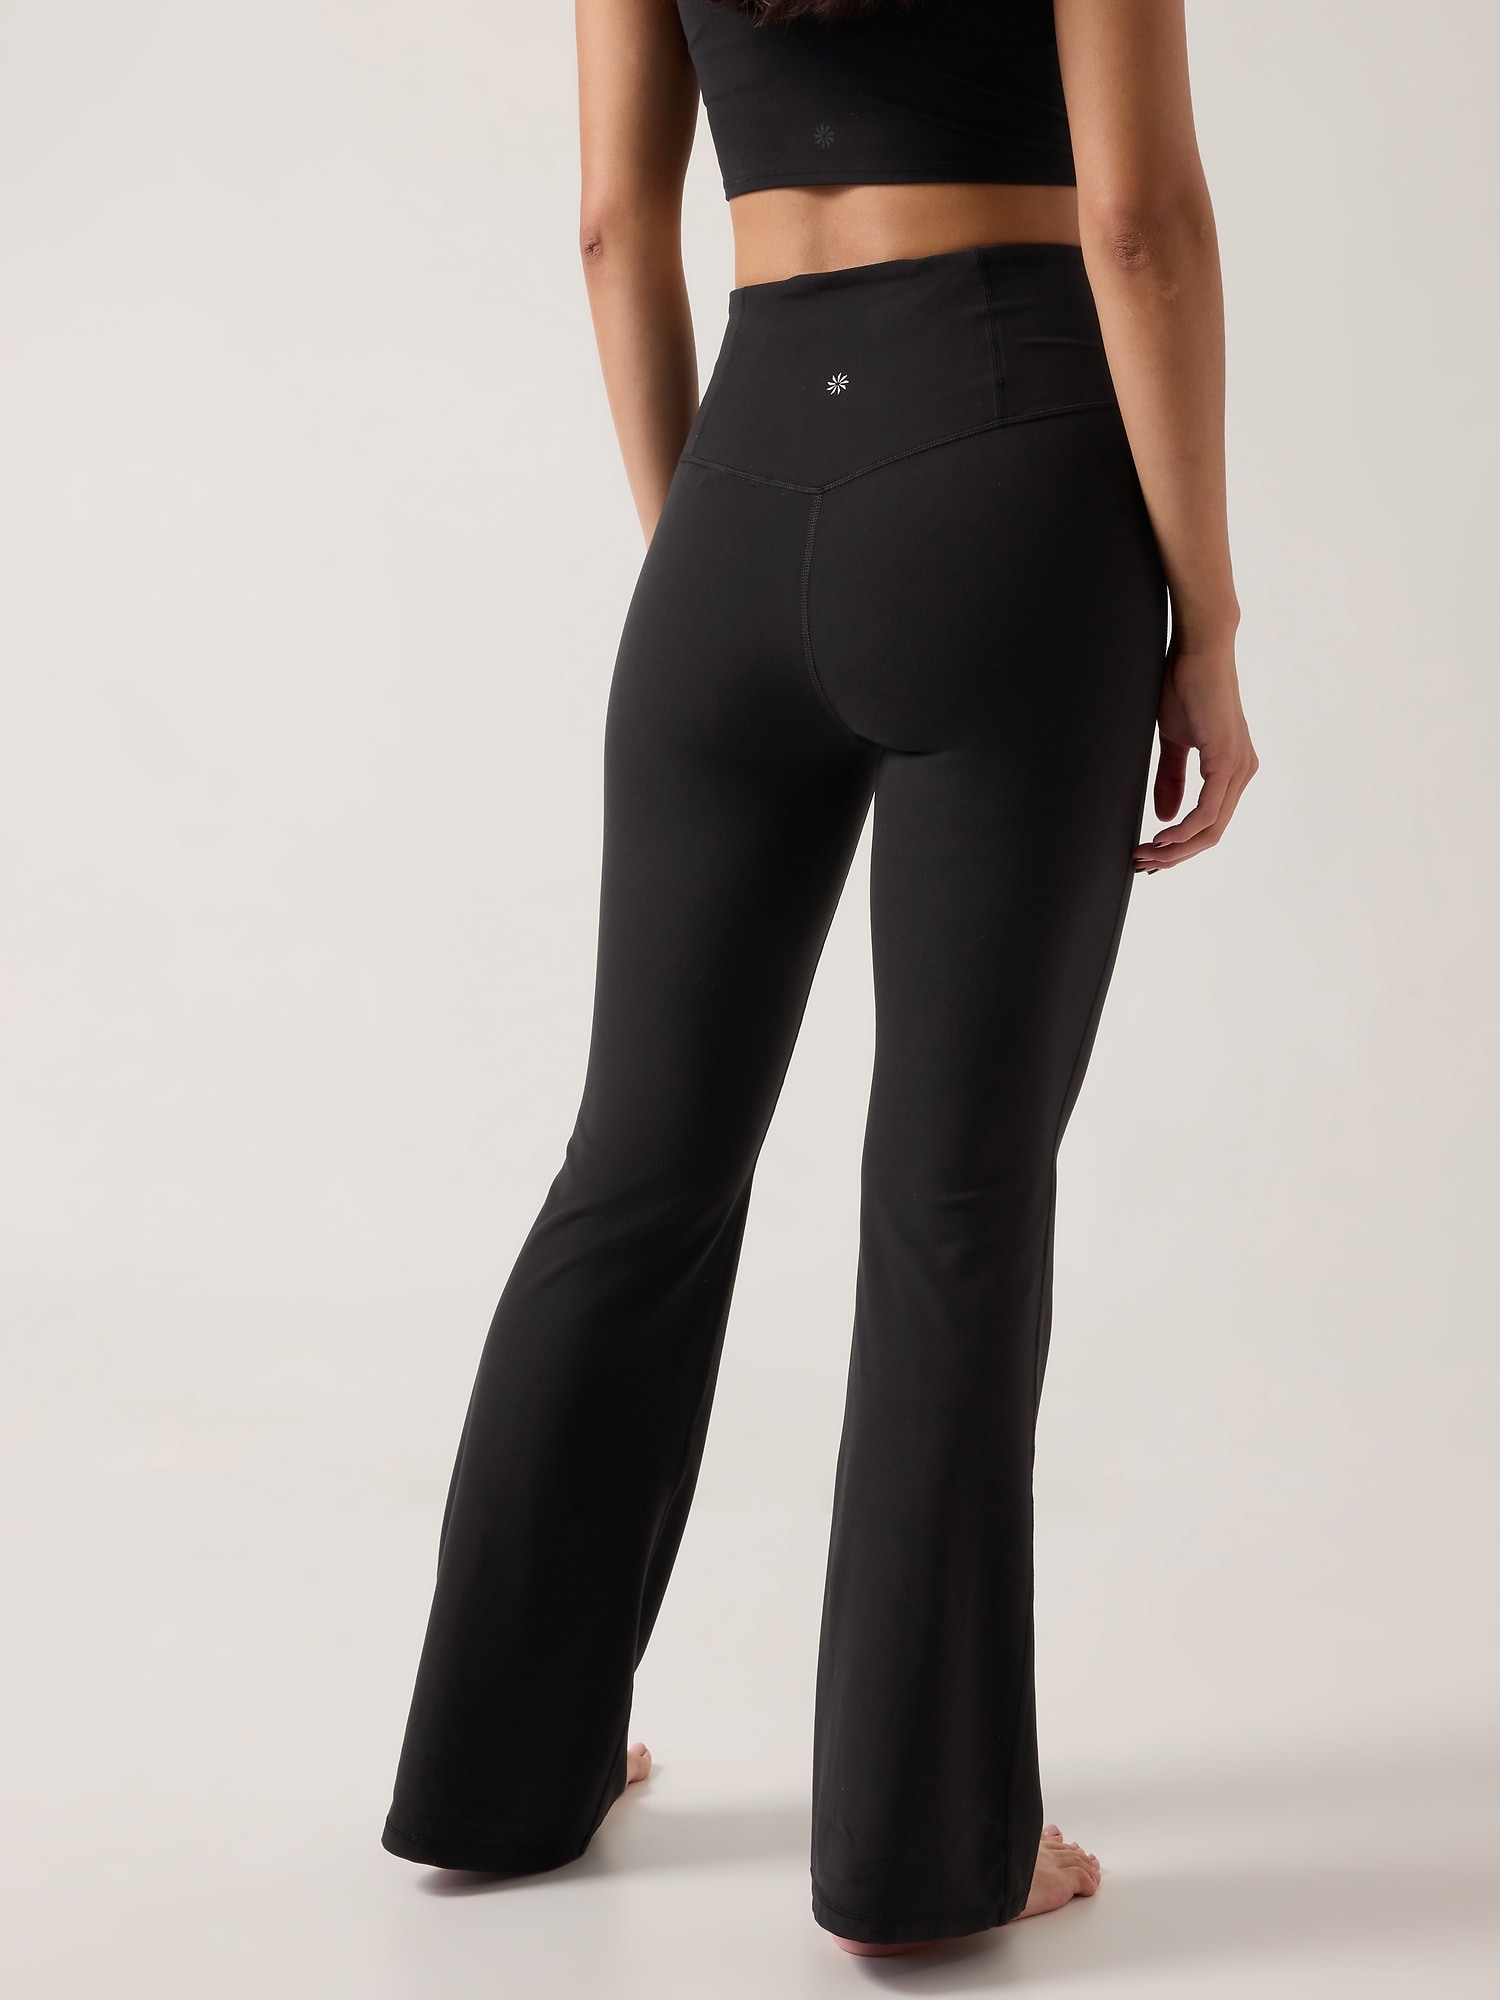 Lululemon Black Sheer Side Yoga Pants - Size 6